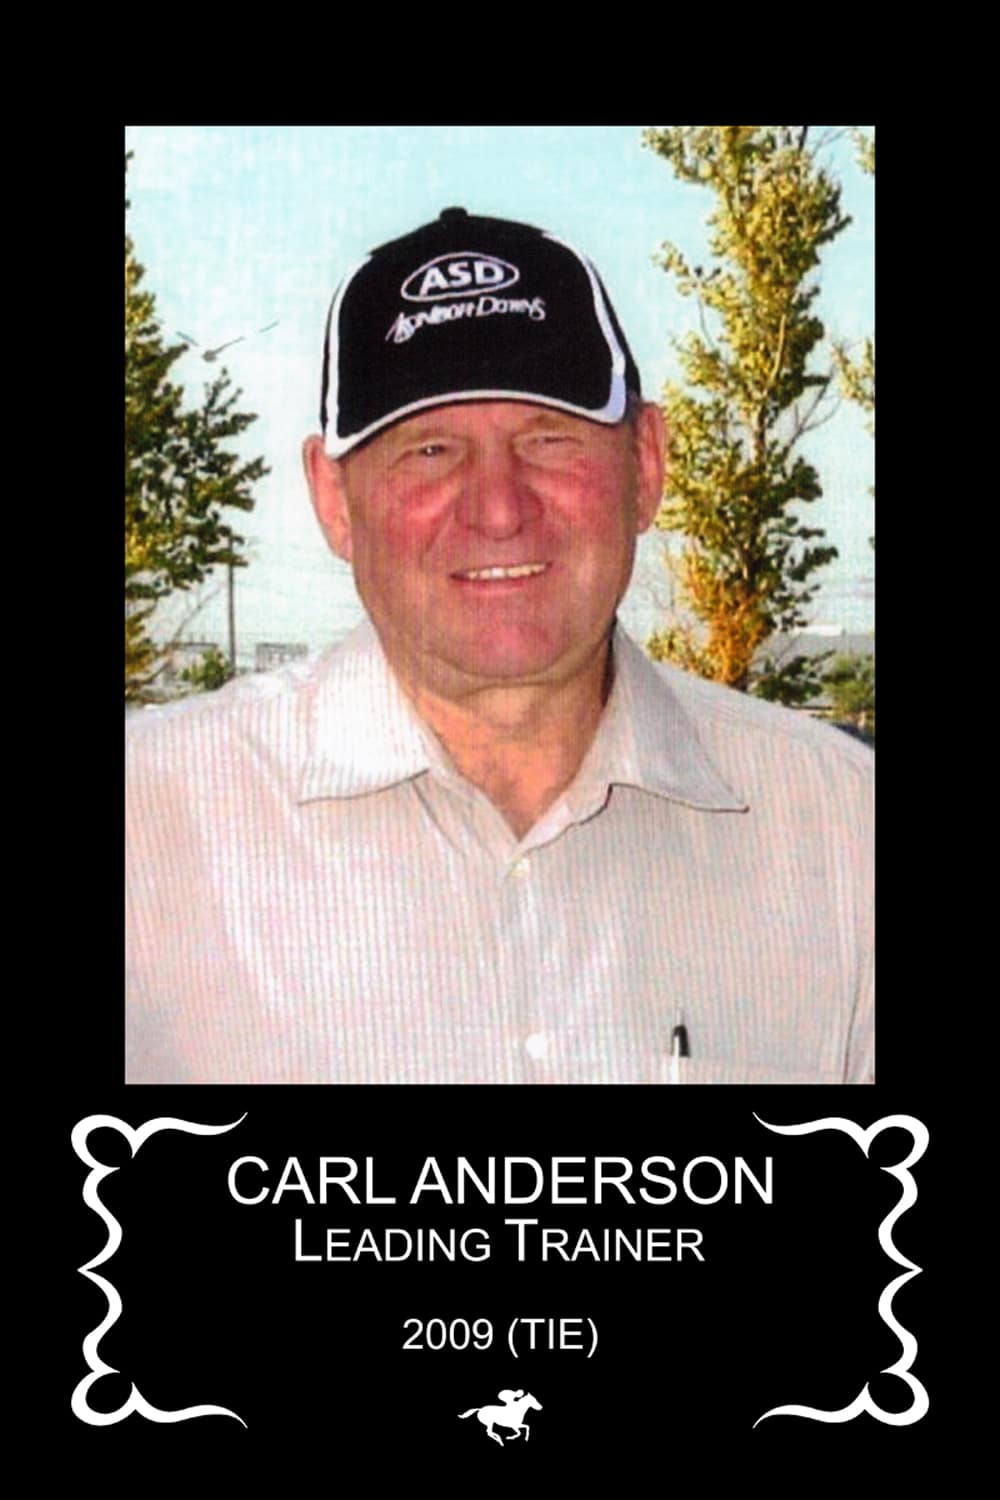 Carl Anderson. Leading ASD trainer 2009.